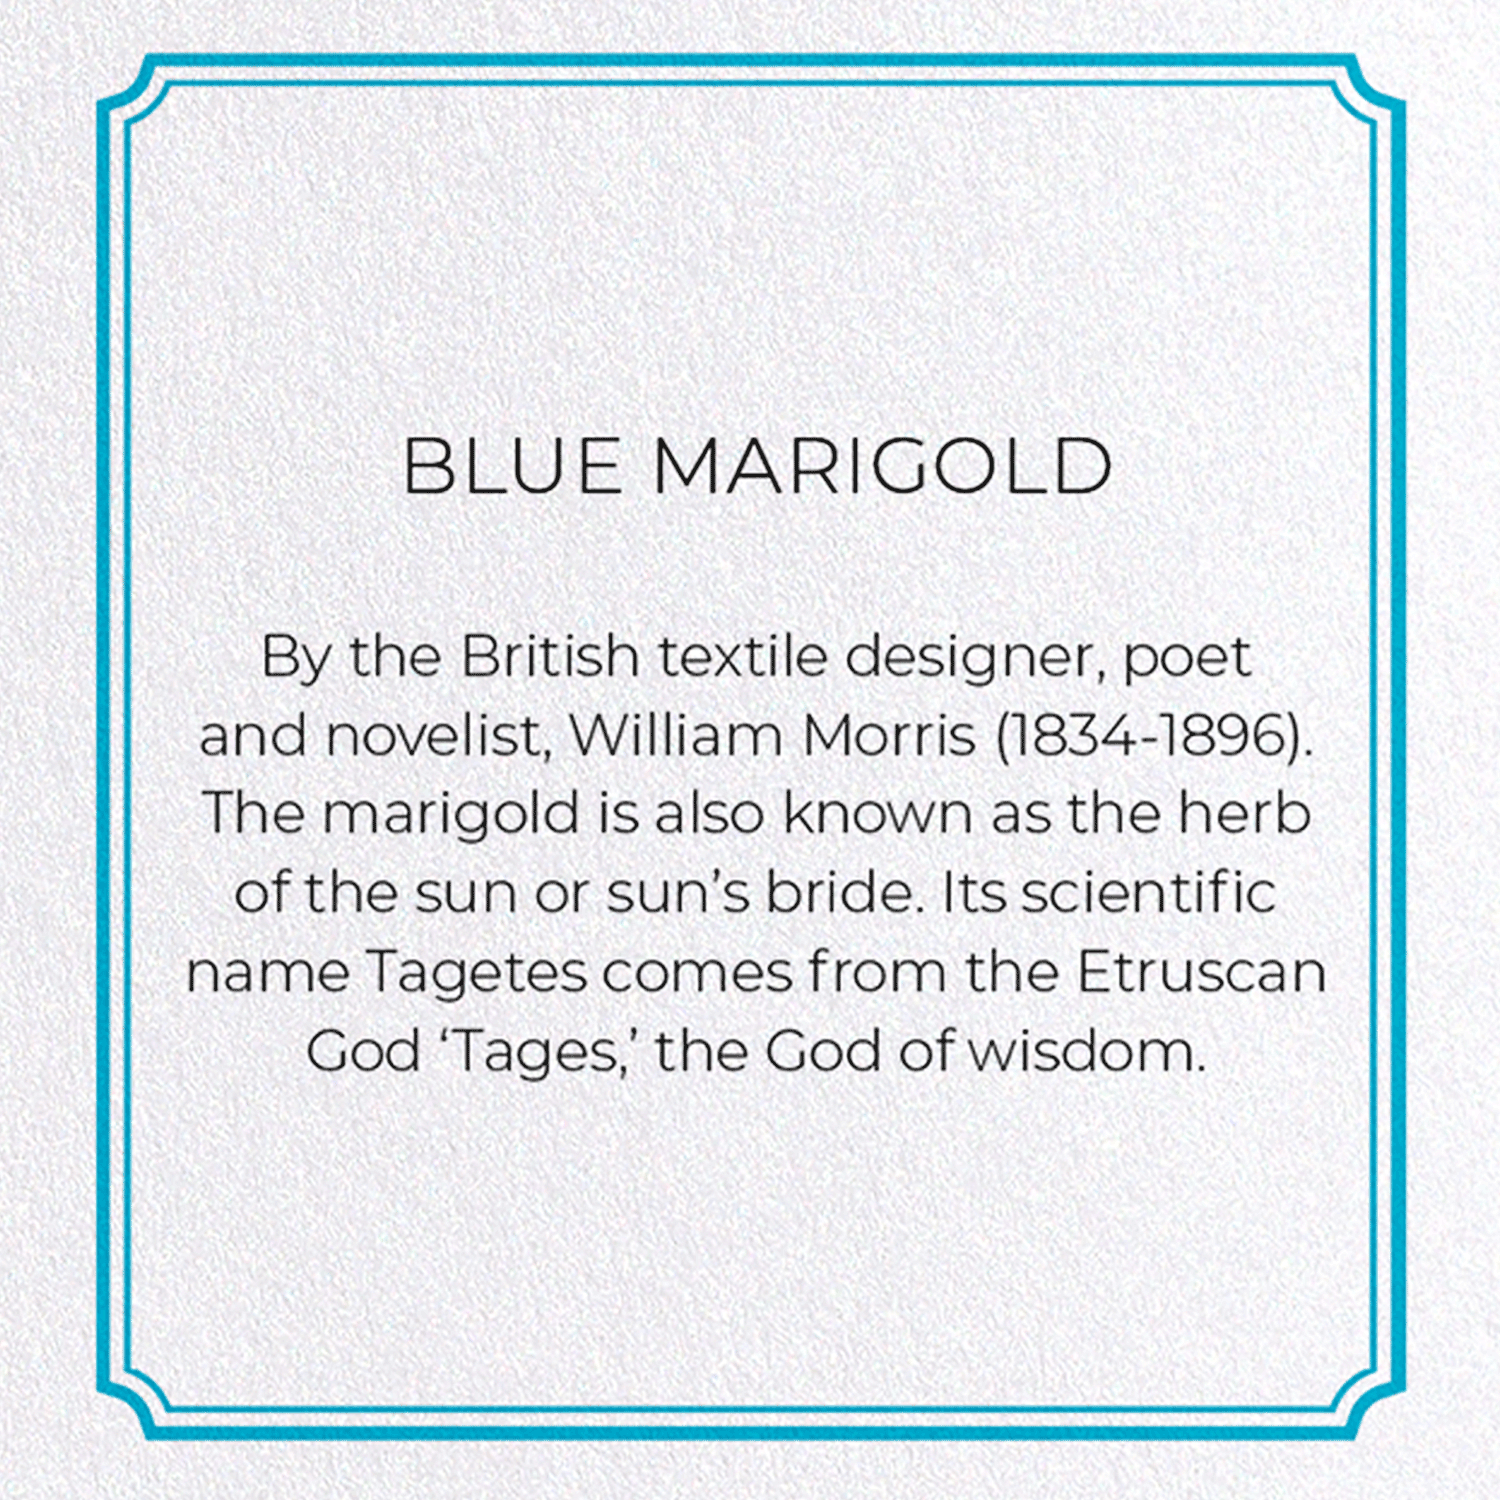 BLUE MARIGOLD